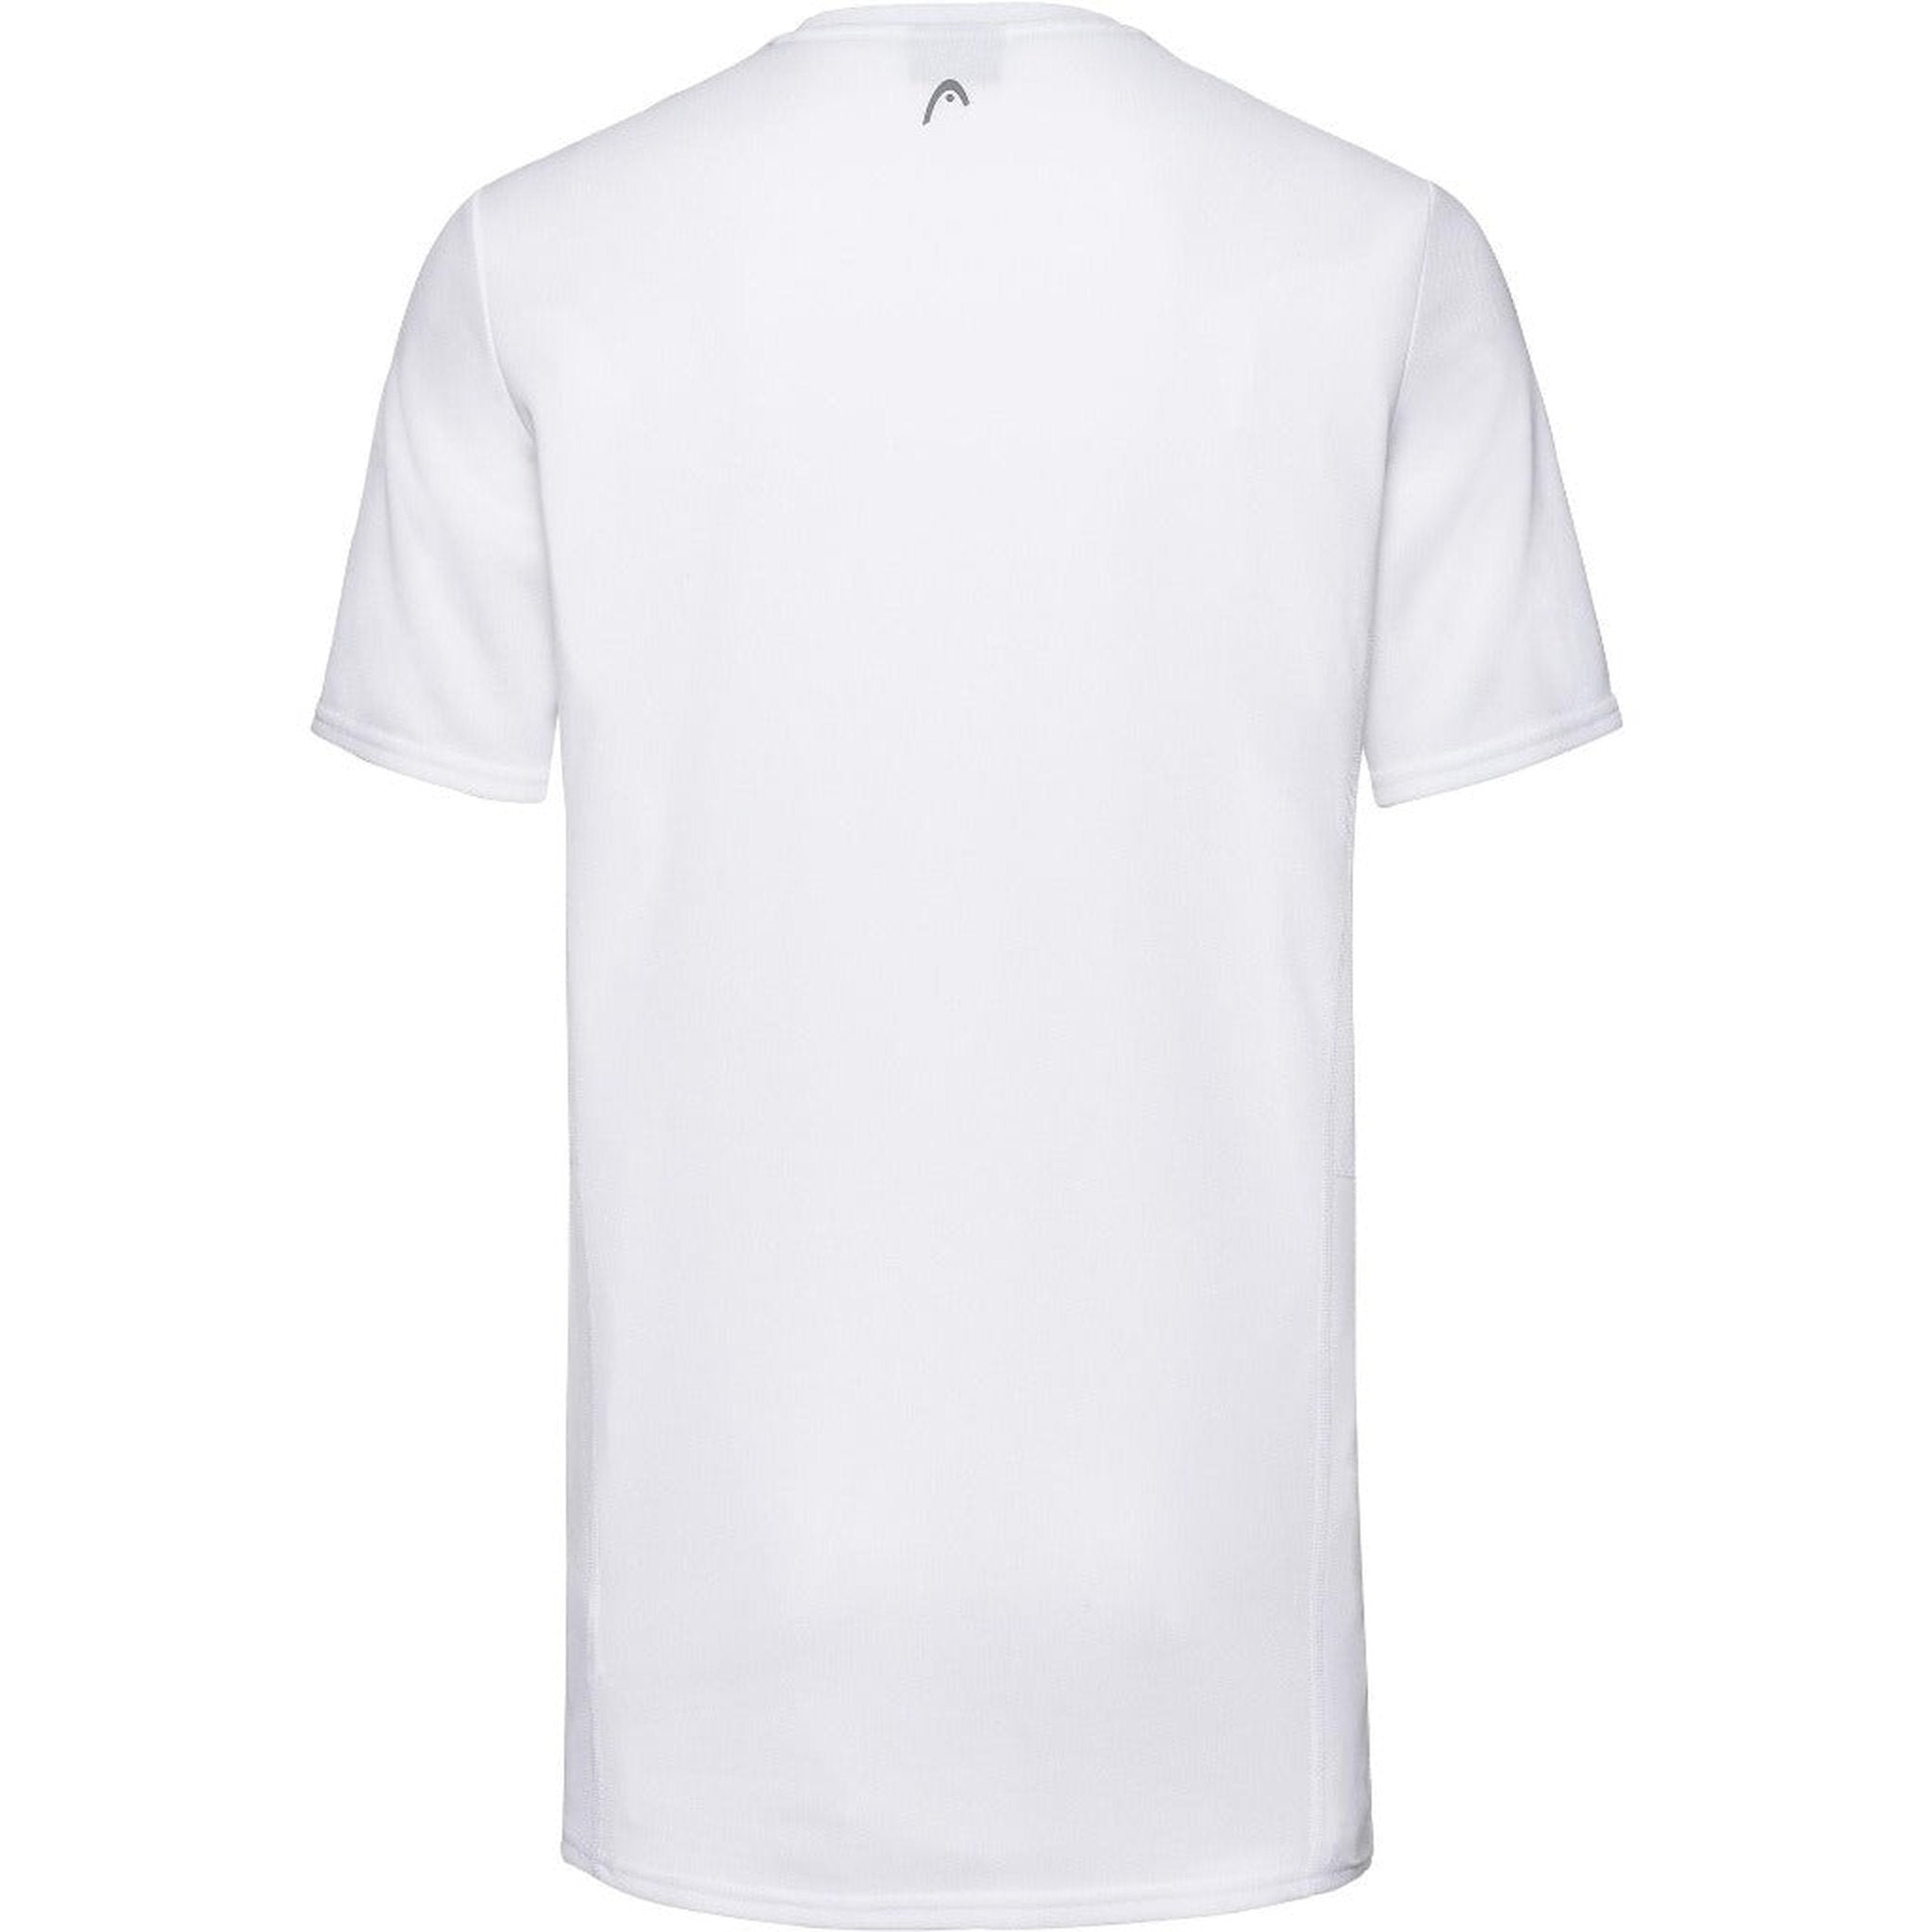 Head Mens Club Tech T-Shirt - White